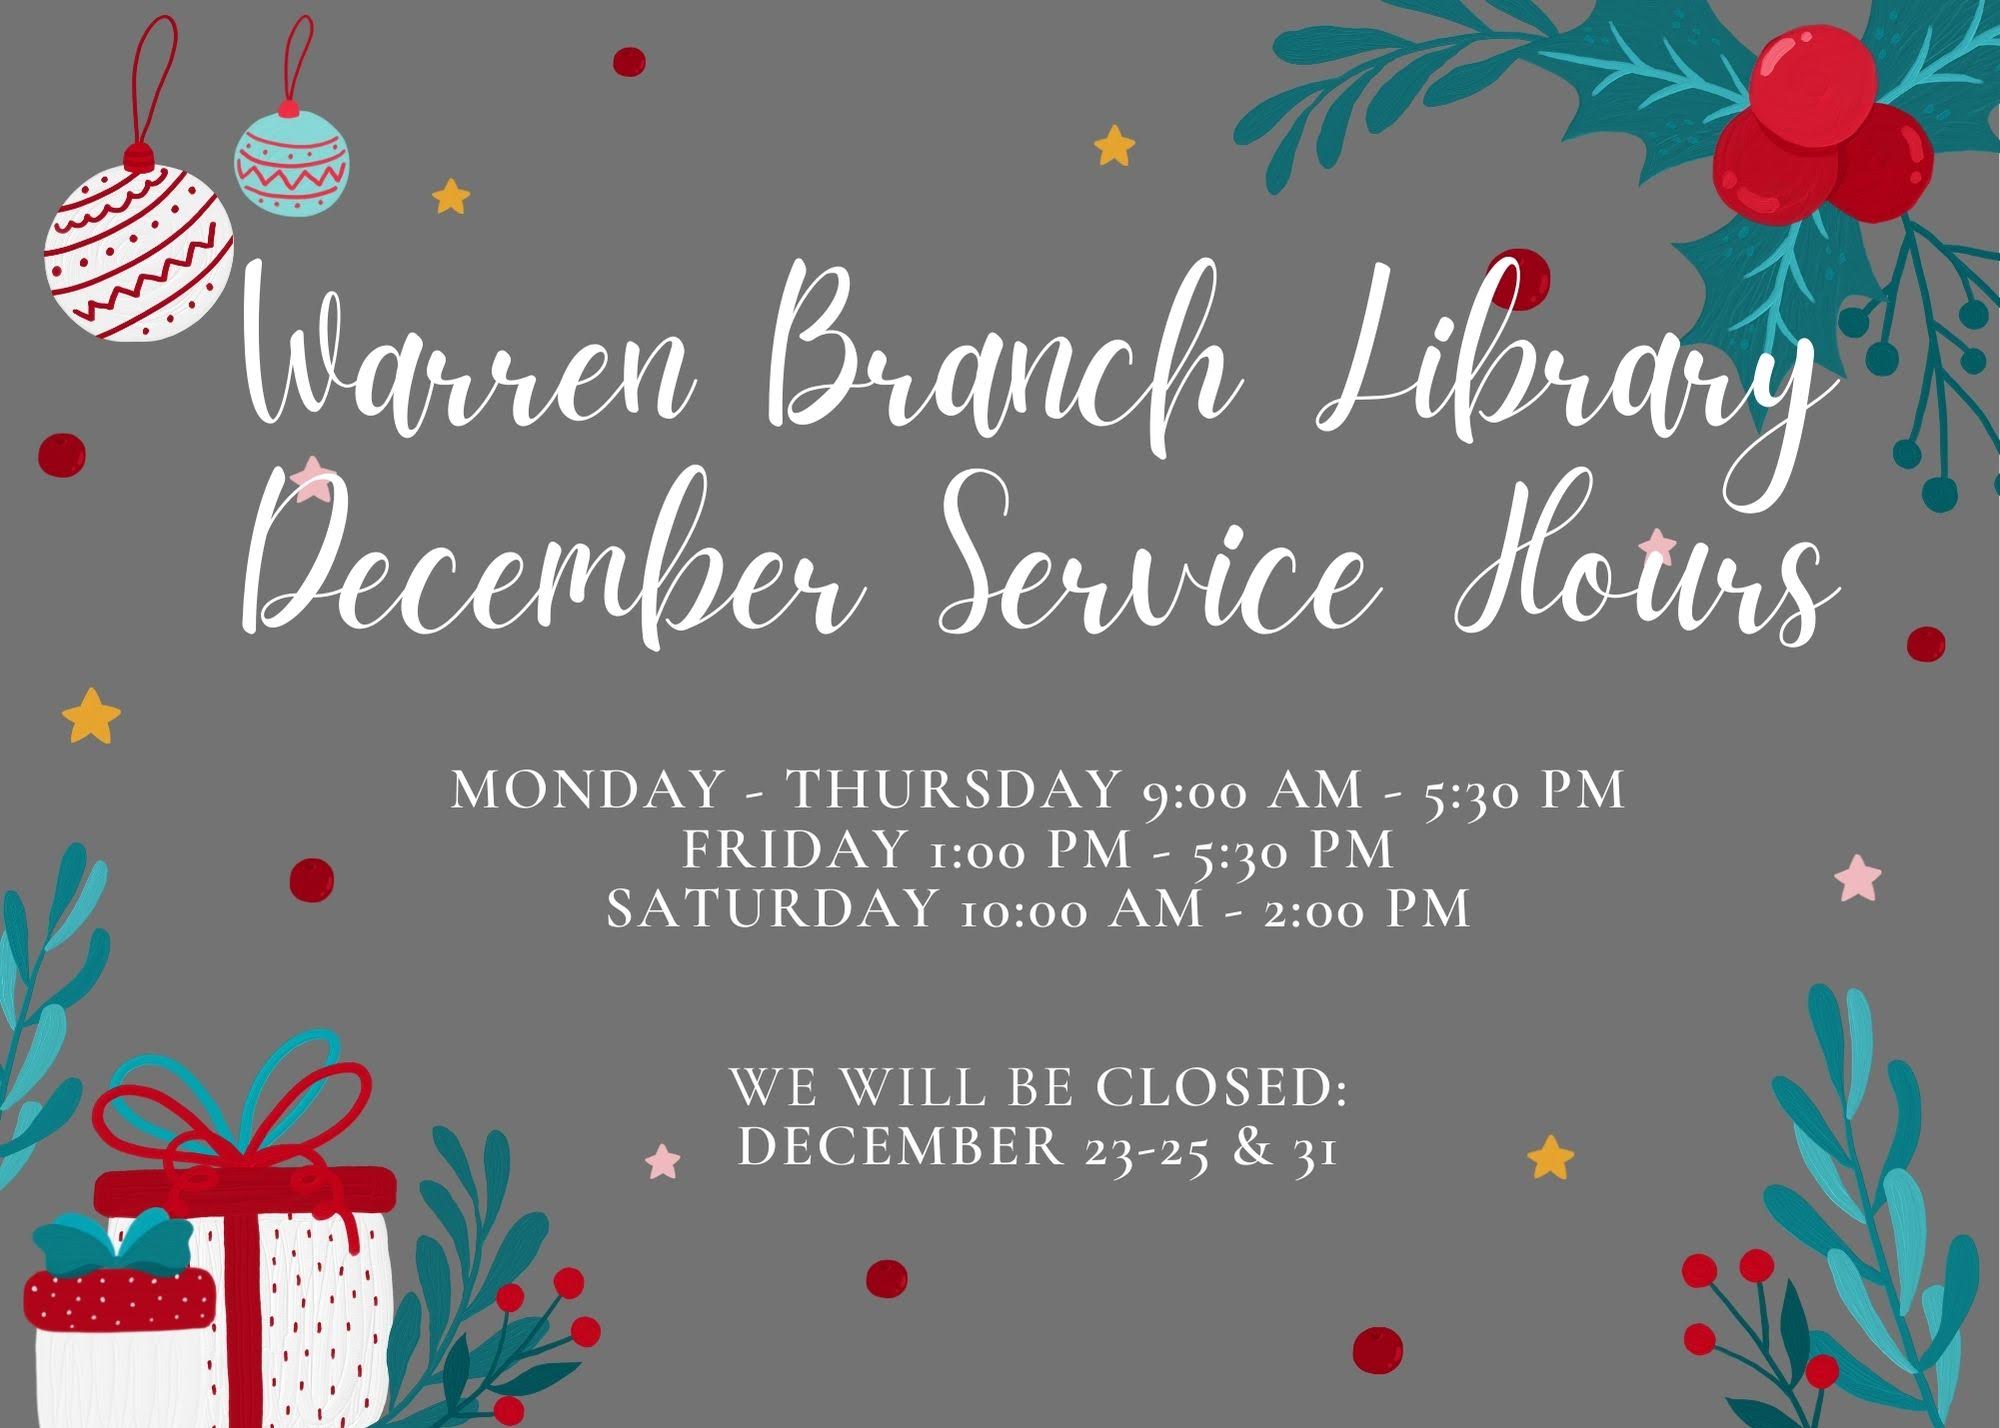 Warren Branch Library announces Christmas closure dates